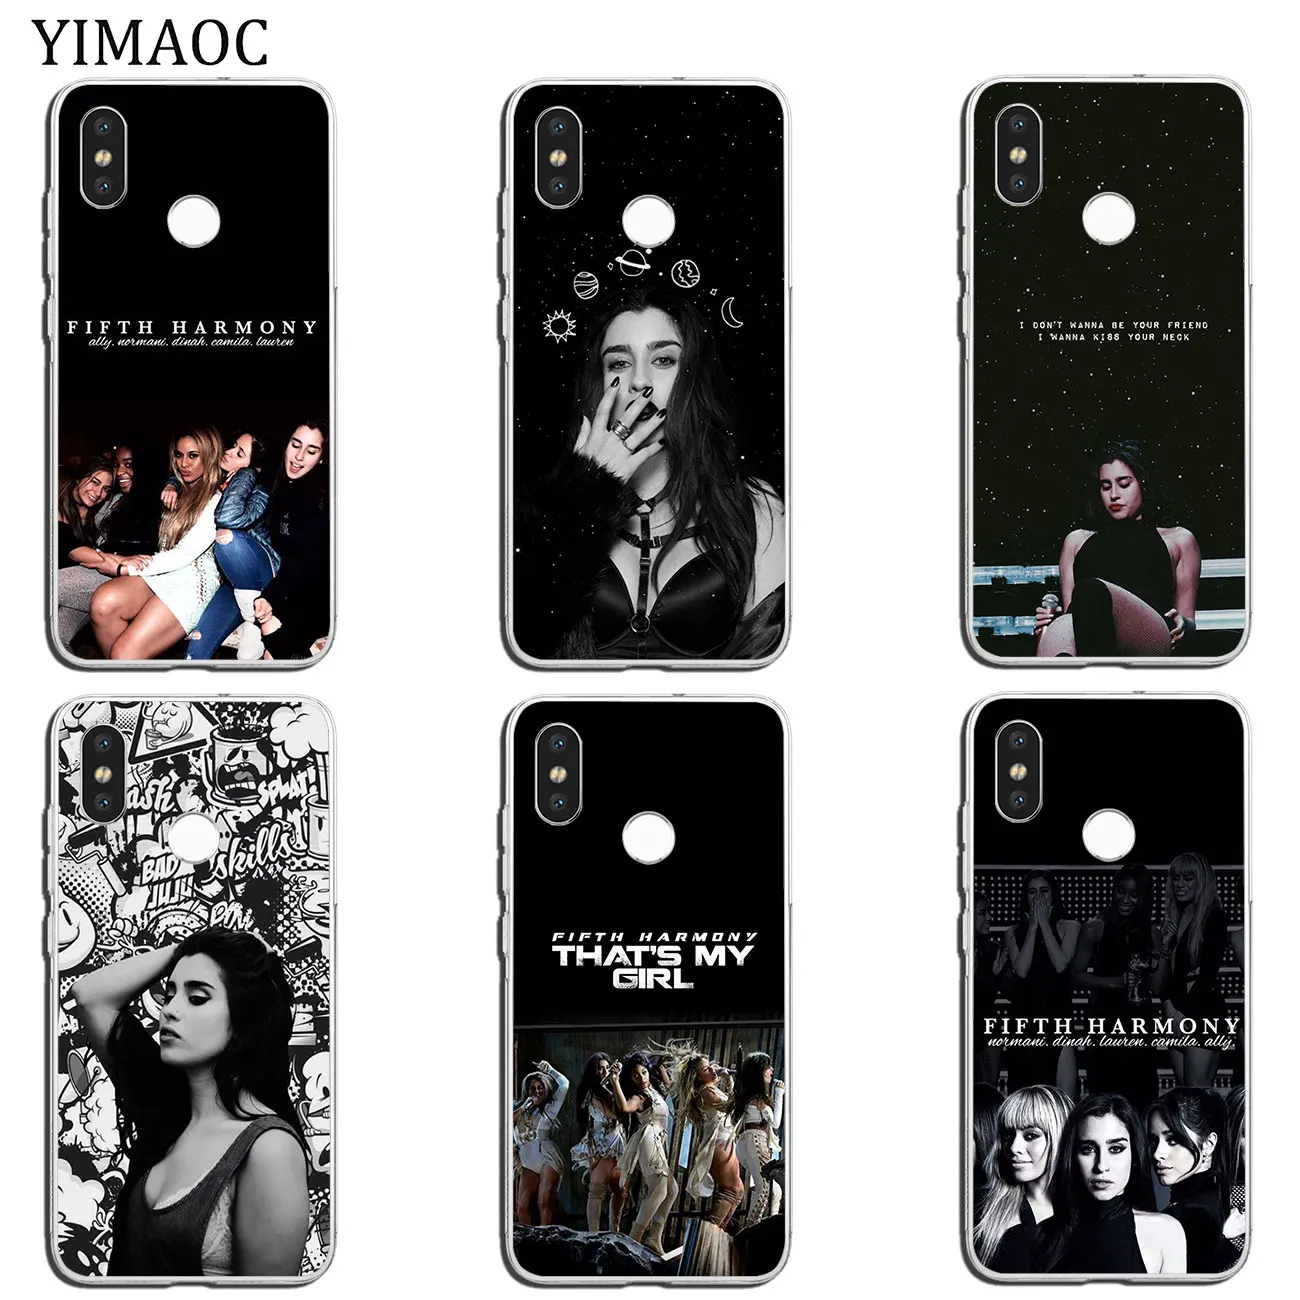 YIMAOC Camila Cabello Fifth Harmony Miękki pokrowiec dla Xiaomi Mi 9 9T CC9 CC9E A3 Pro 8 SE A2 Lite A1 pocophone f1 MiX 2S MAX 3 MI9